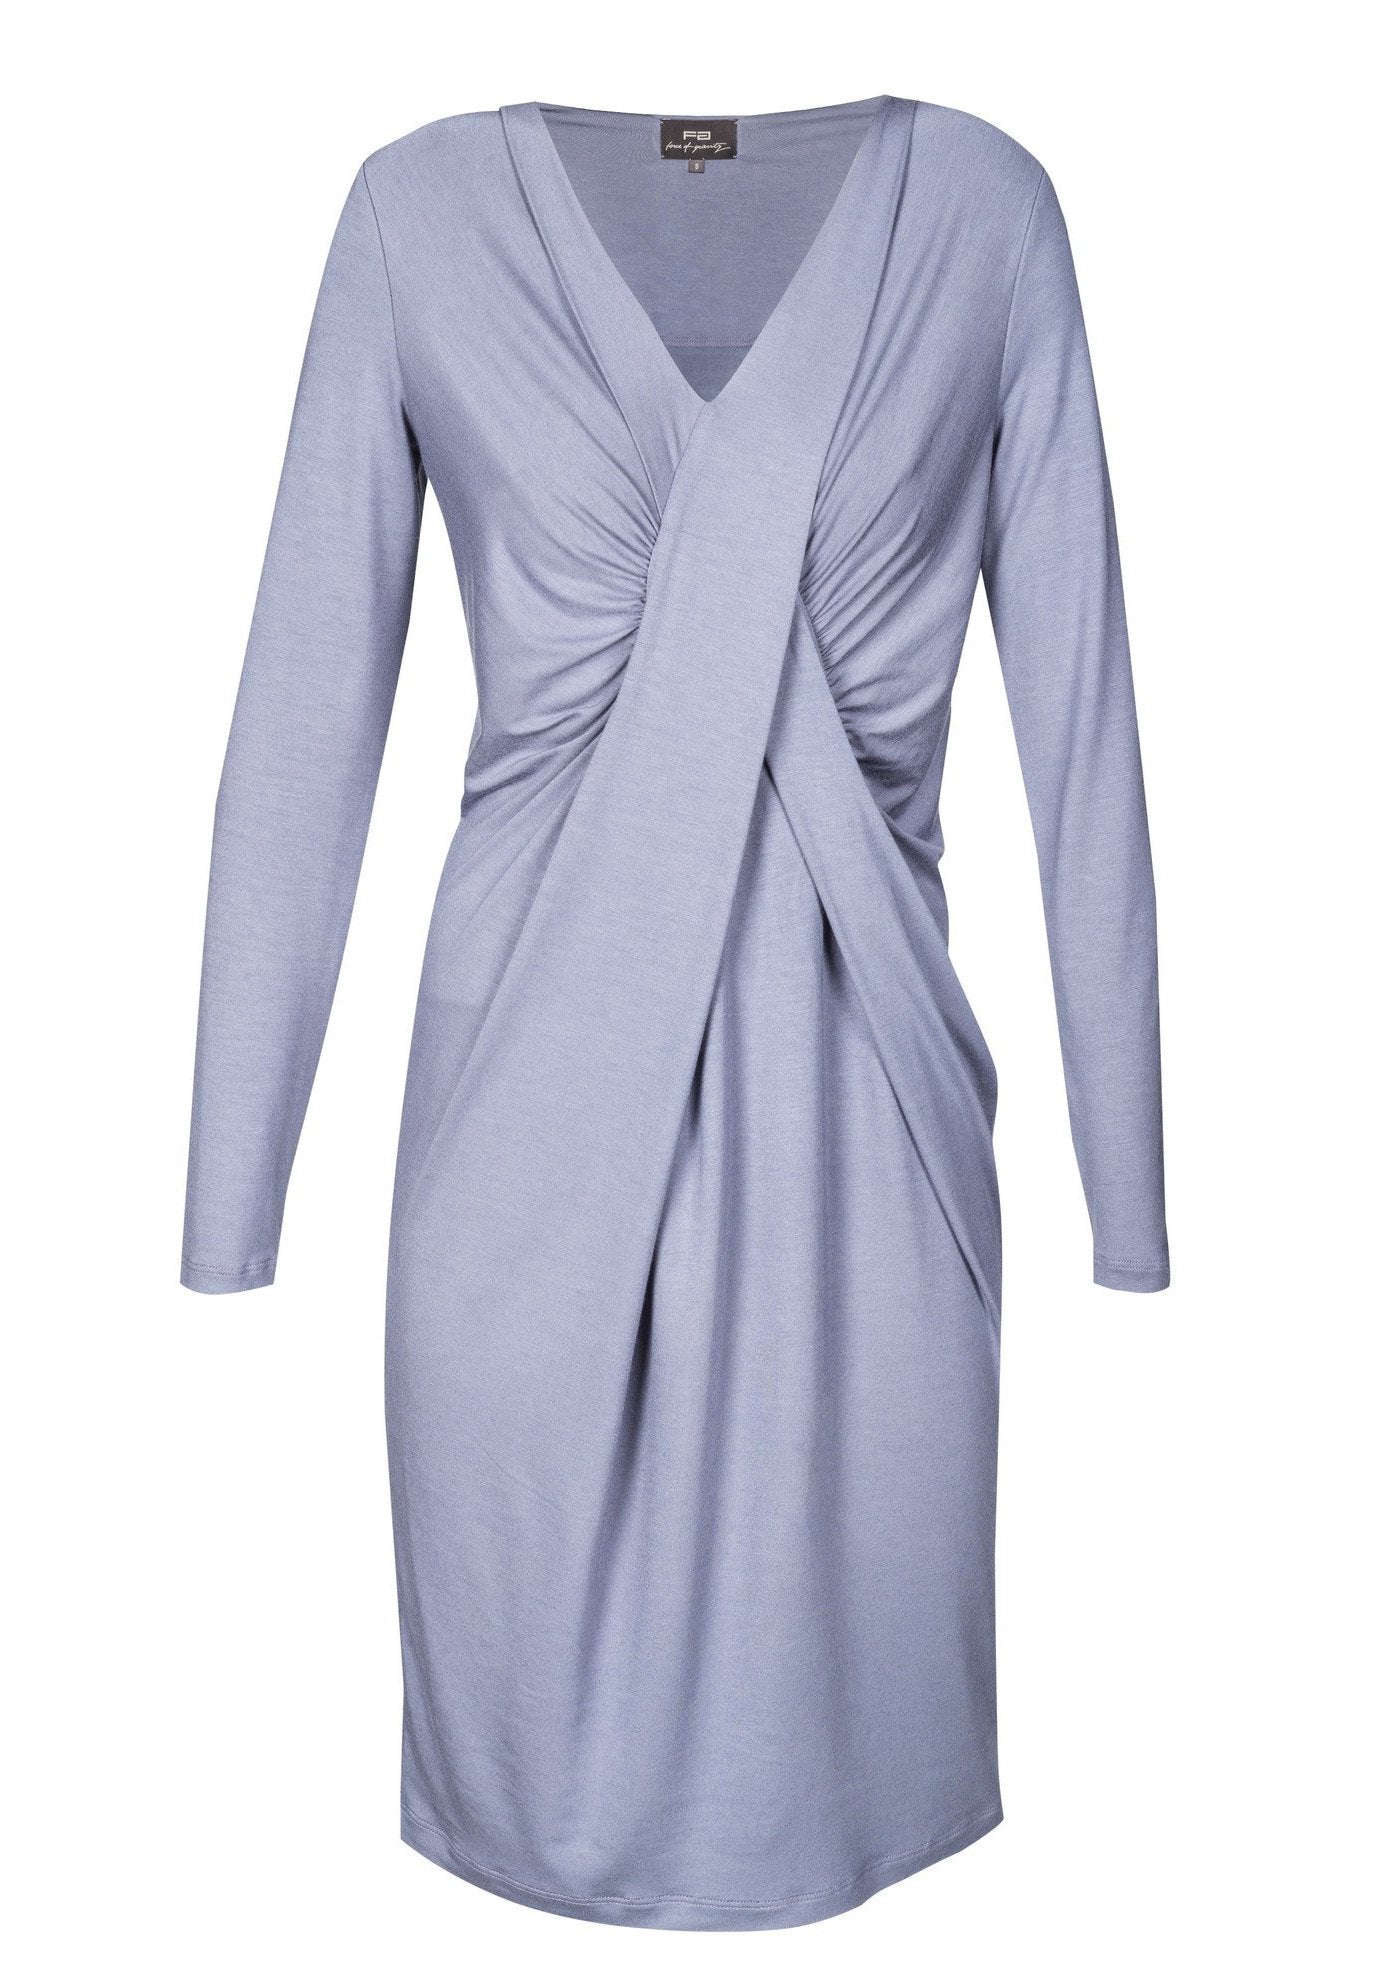 Viscose & cashmere blend dress in light blue